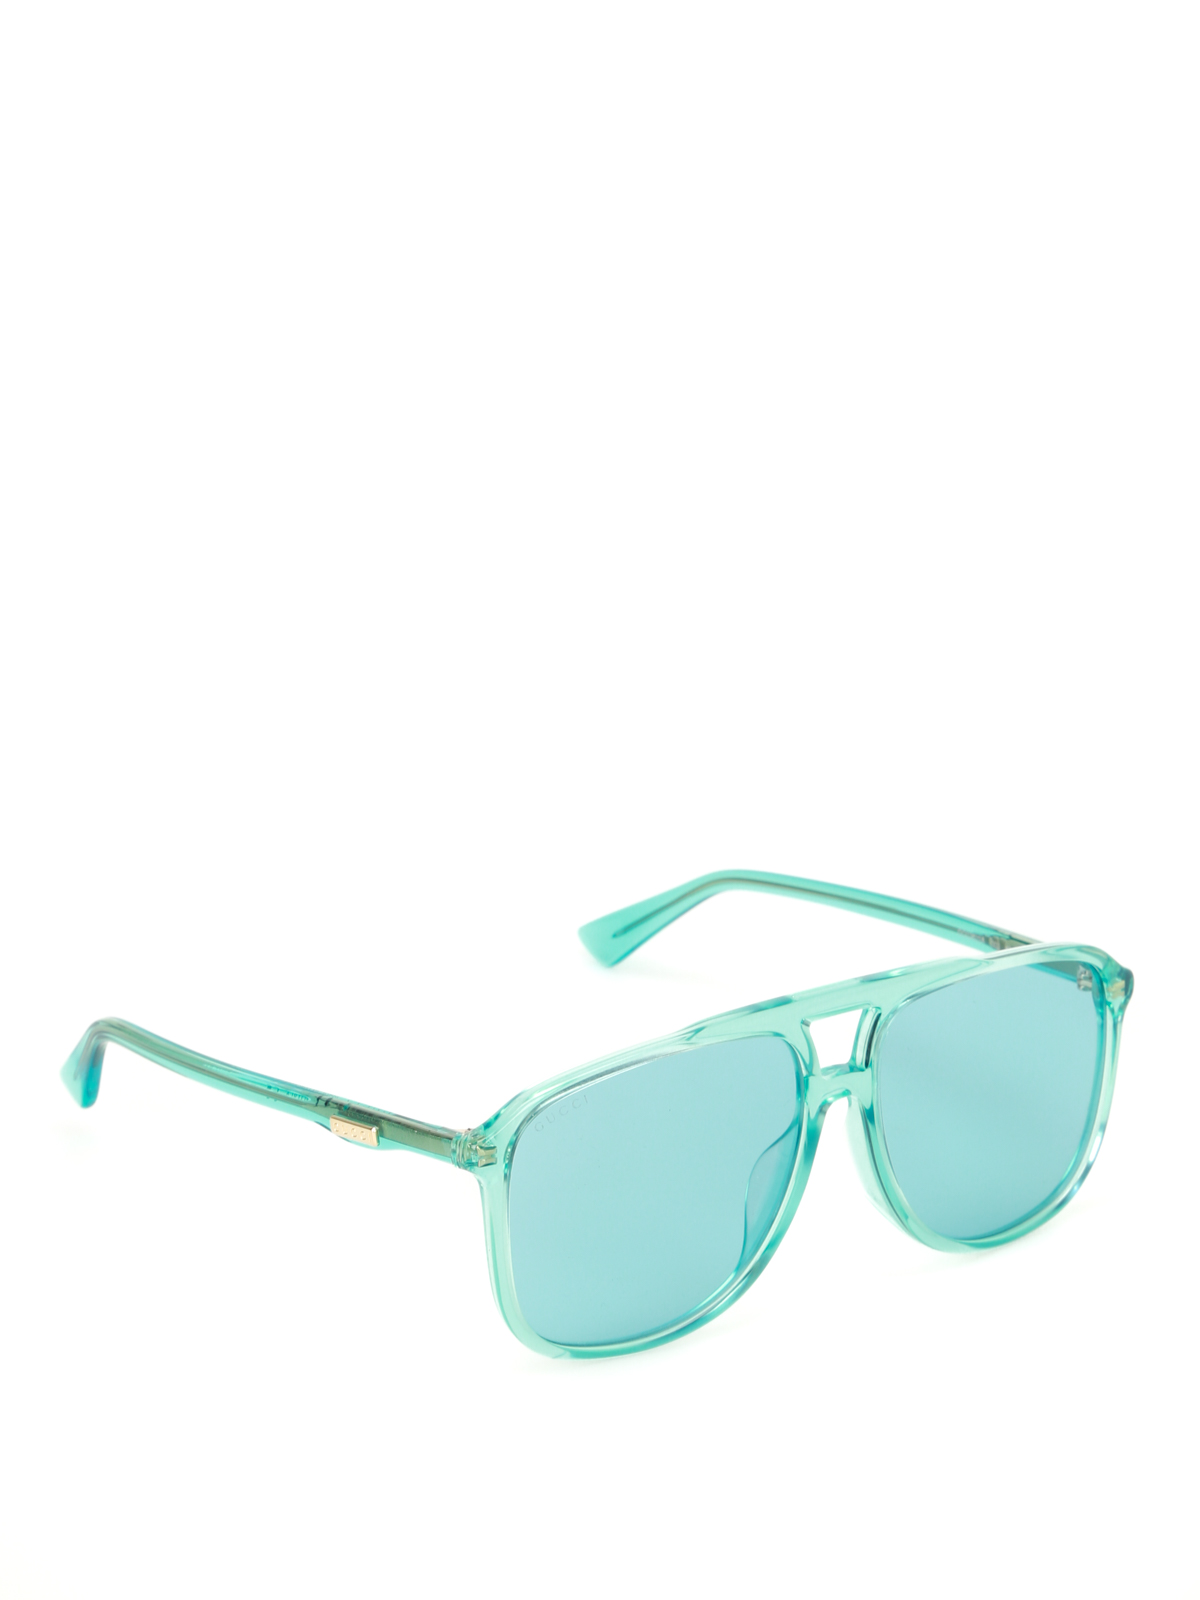 gucci blue light glasses, OFF 75%,www 